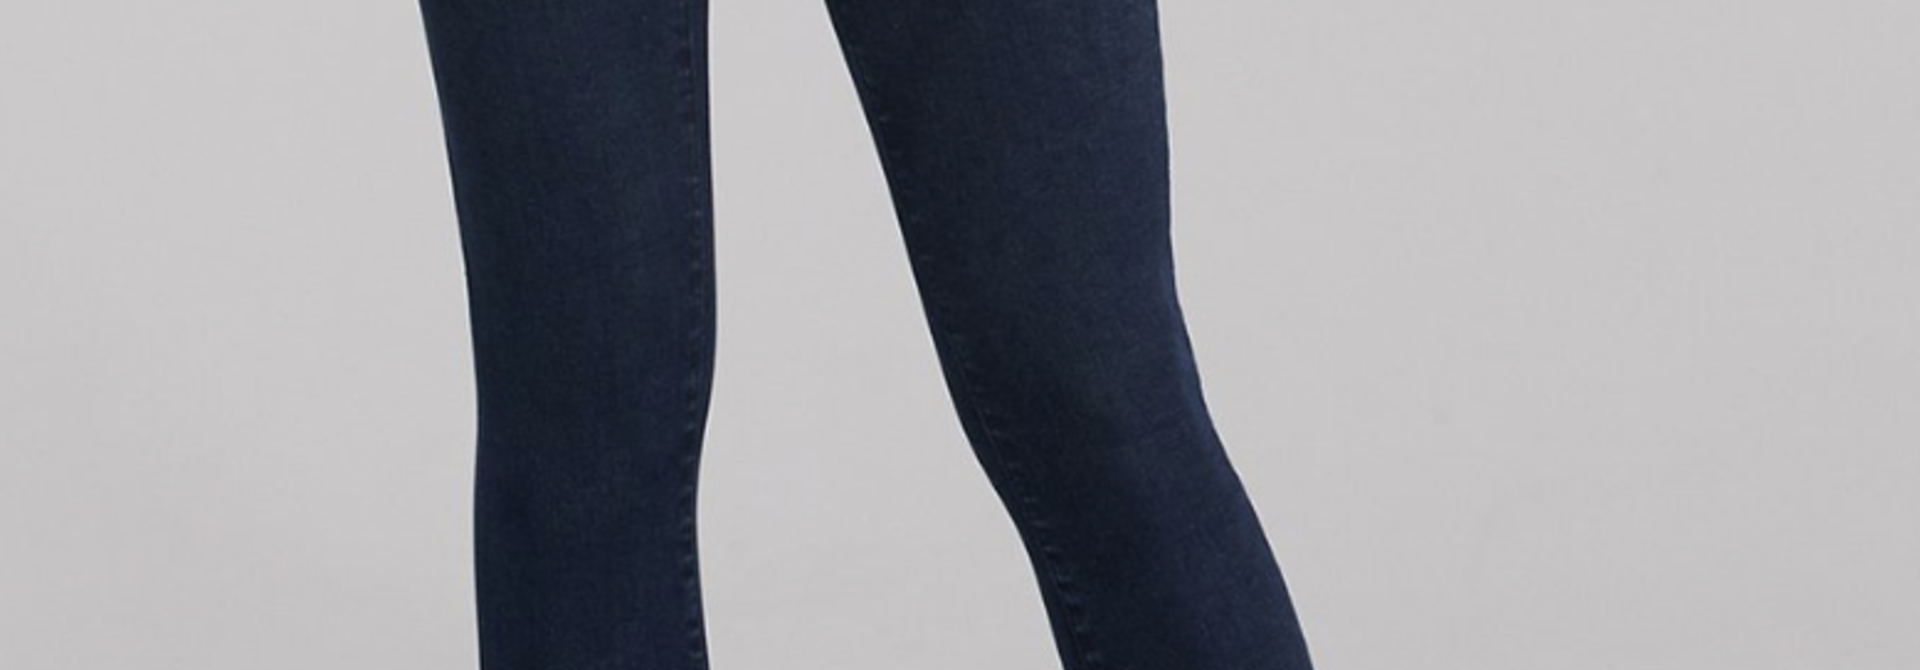 Rachel Skinny Jeans Mantra